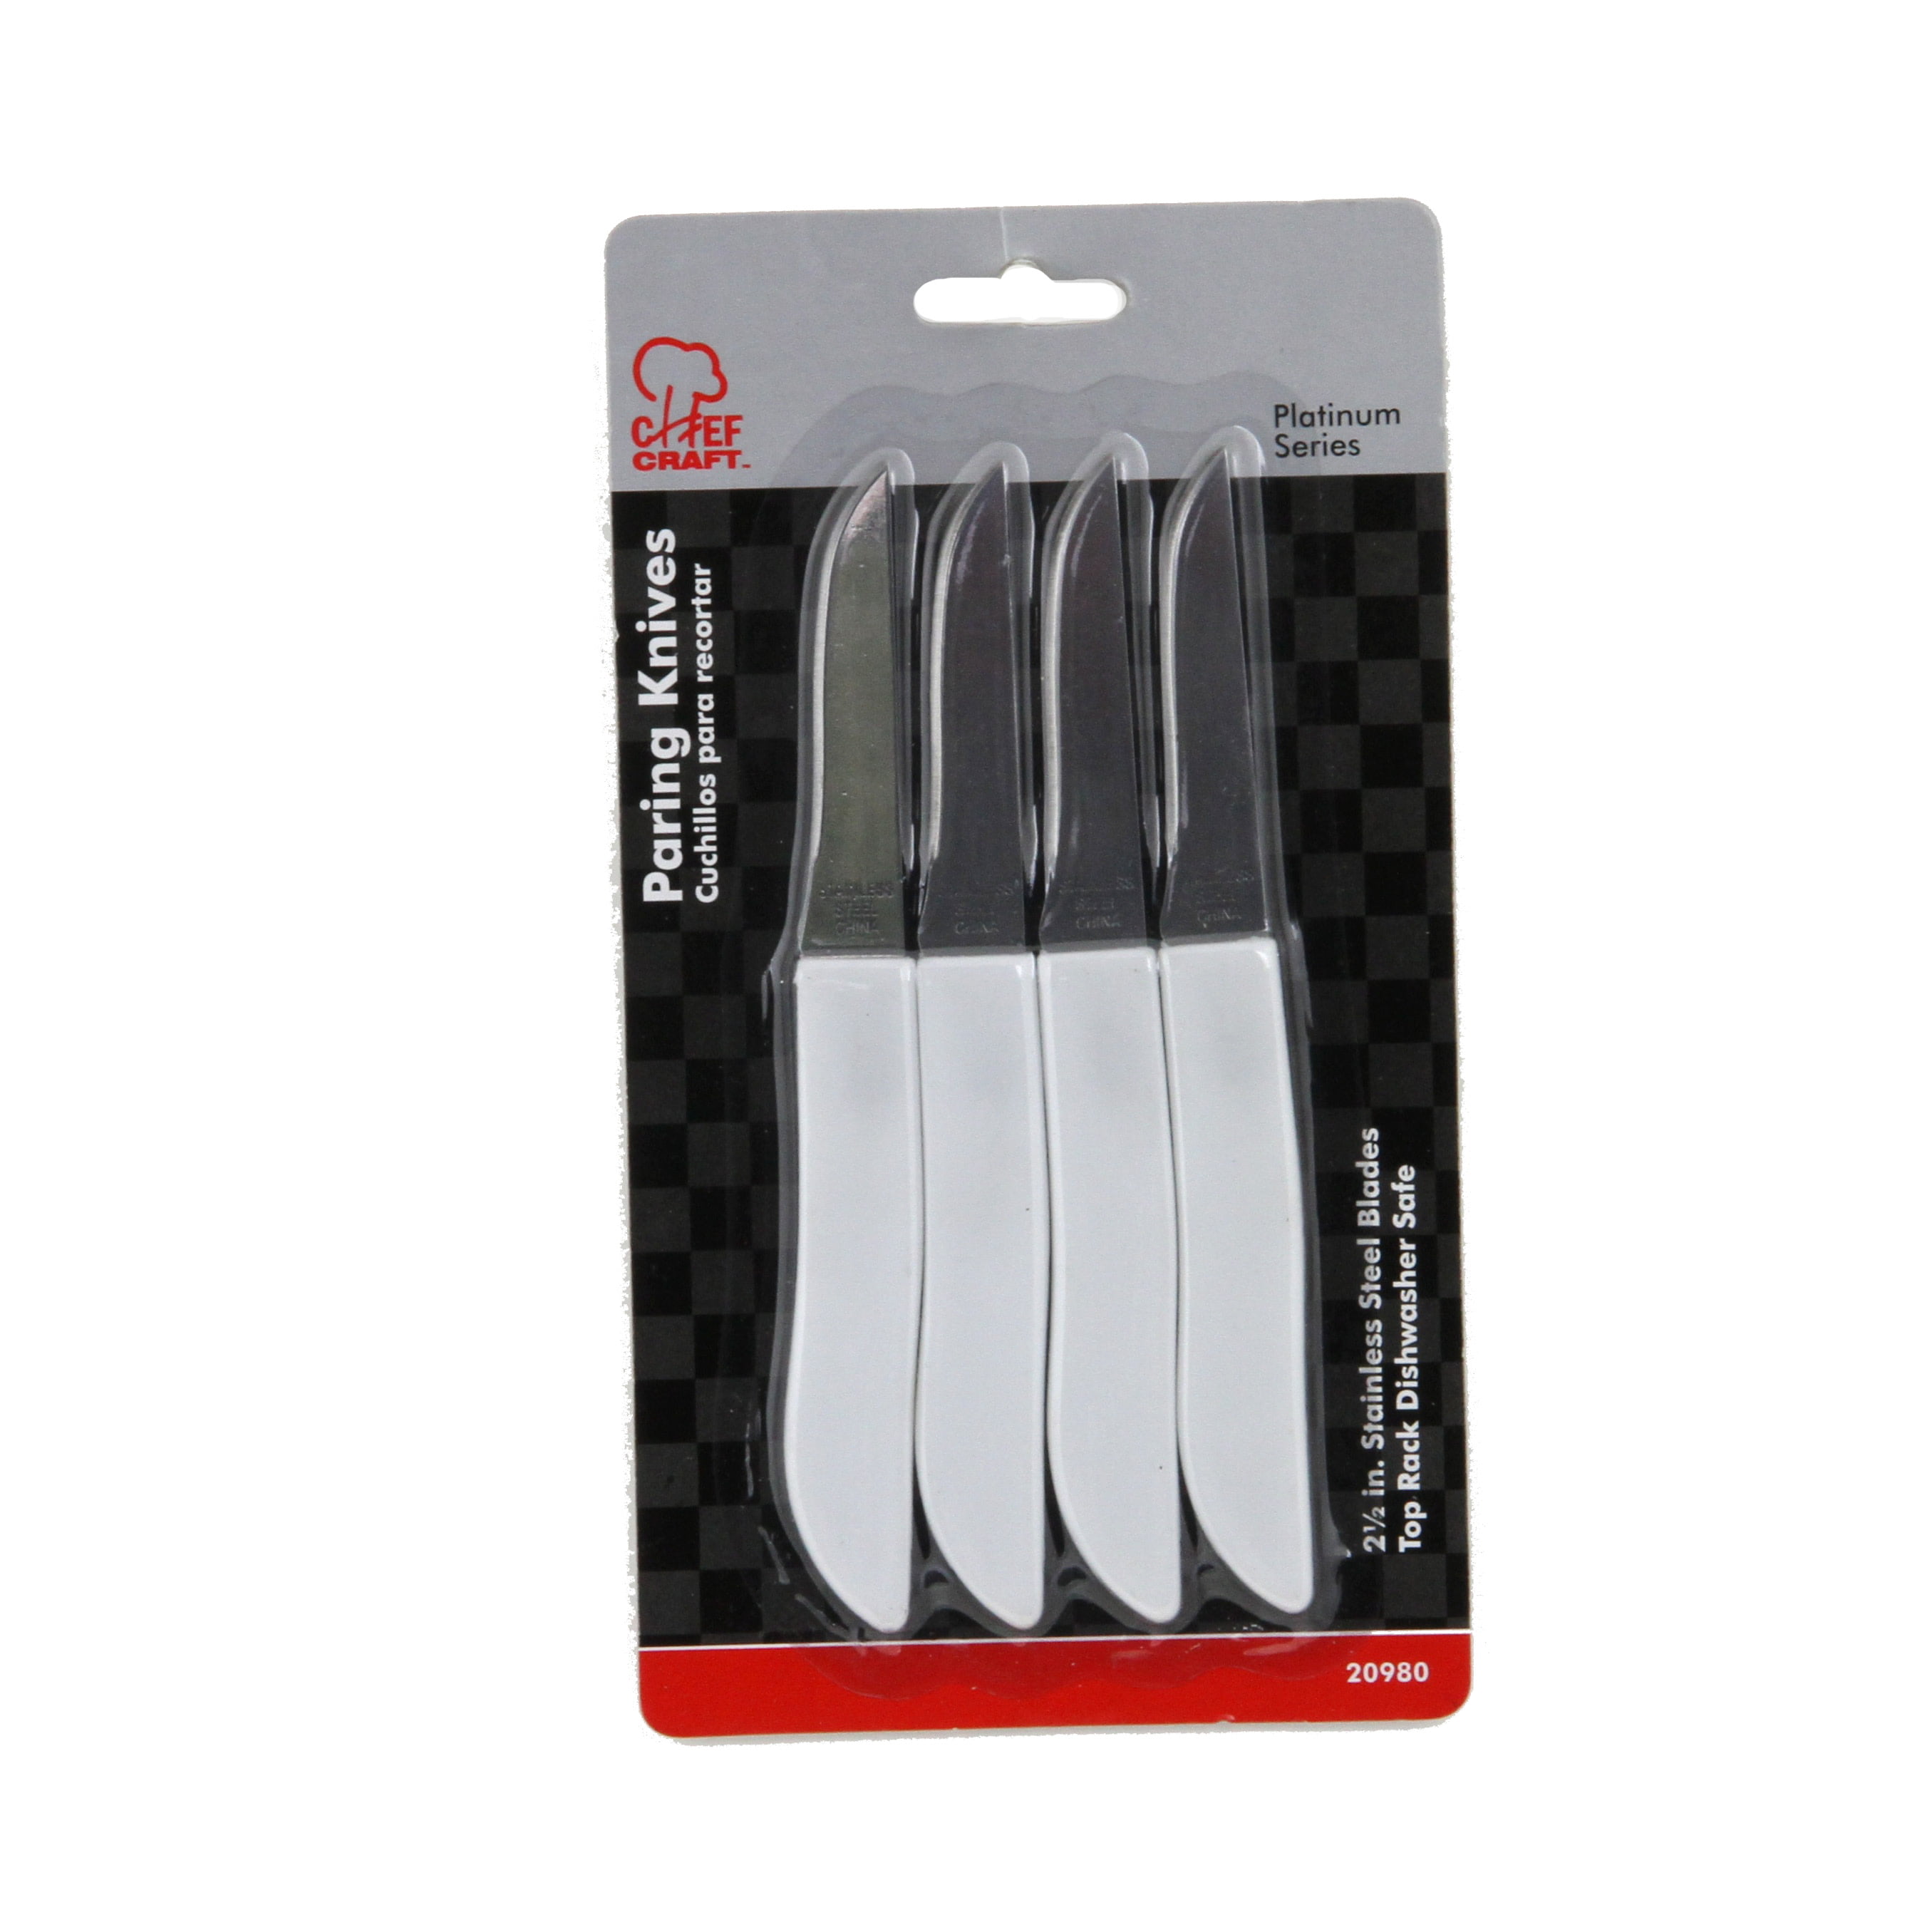 Kershaw 4 Piece Knife Set, Set Includes 3.5 Inch, 2.75 Inch, Two 2.25 Inch  Folding Pocket Knives – Walmart Inventory Checker – BrickSeek